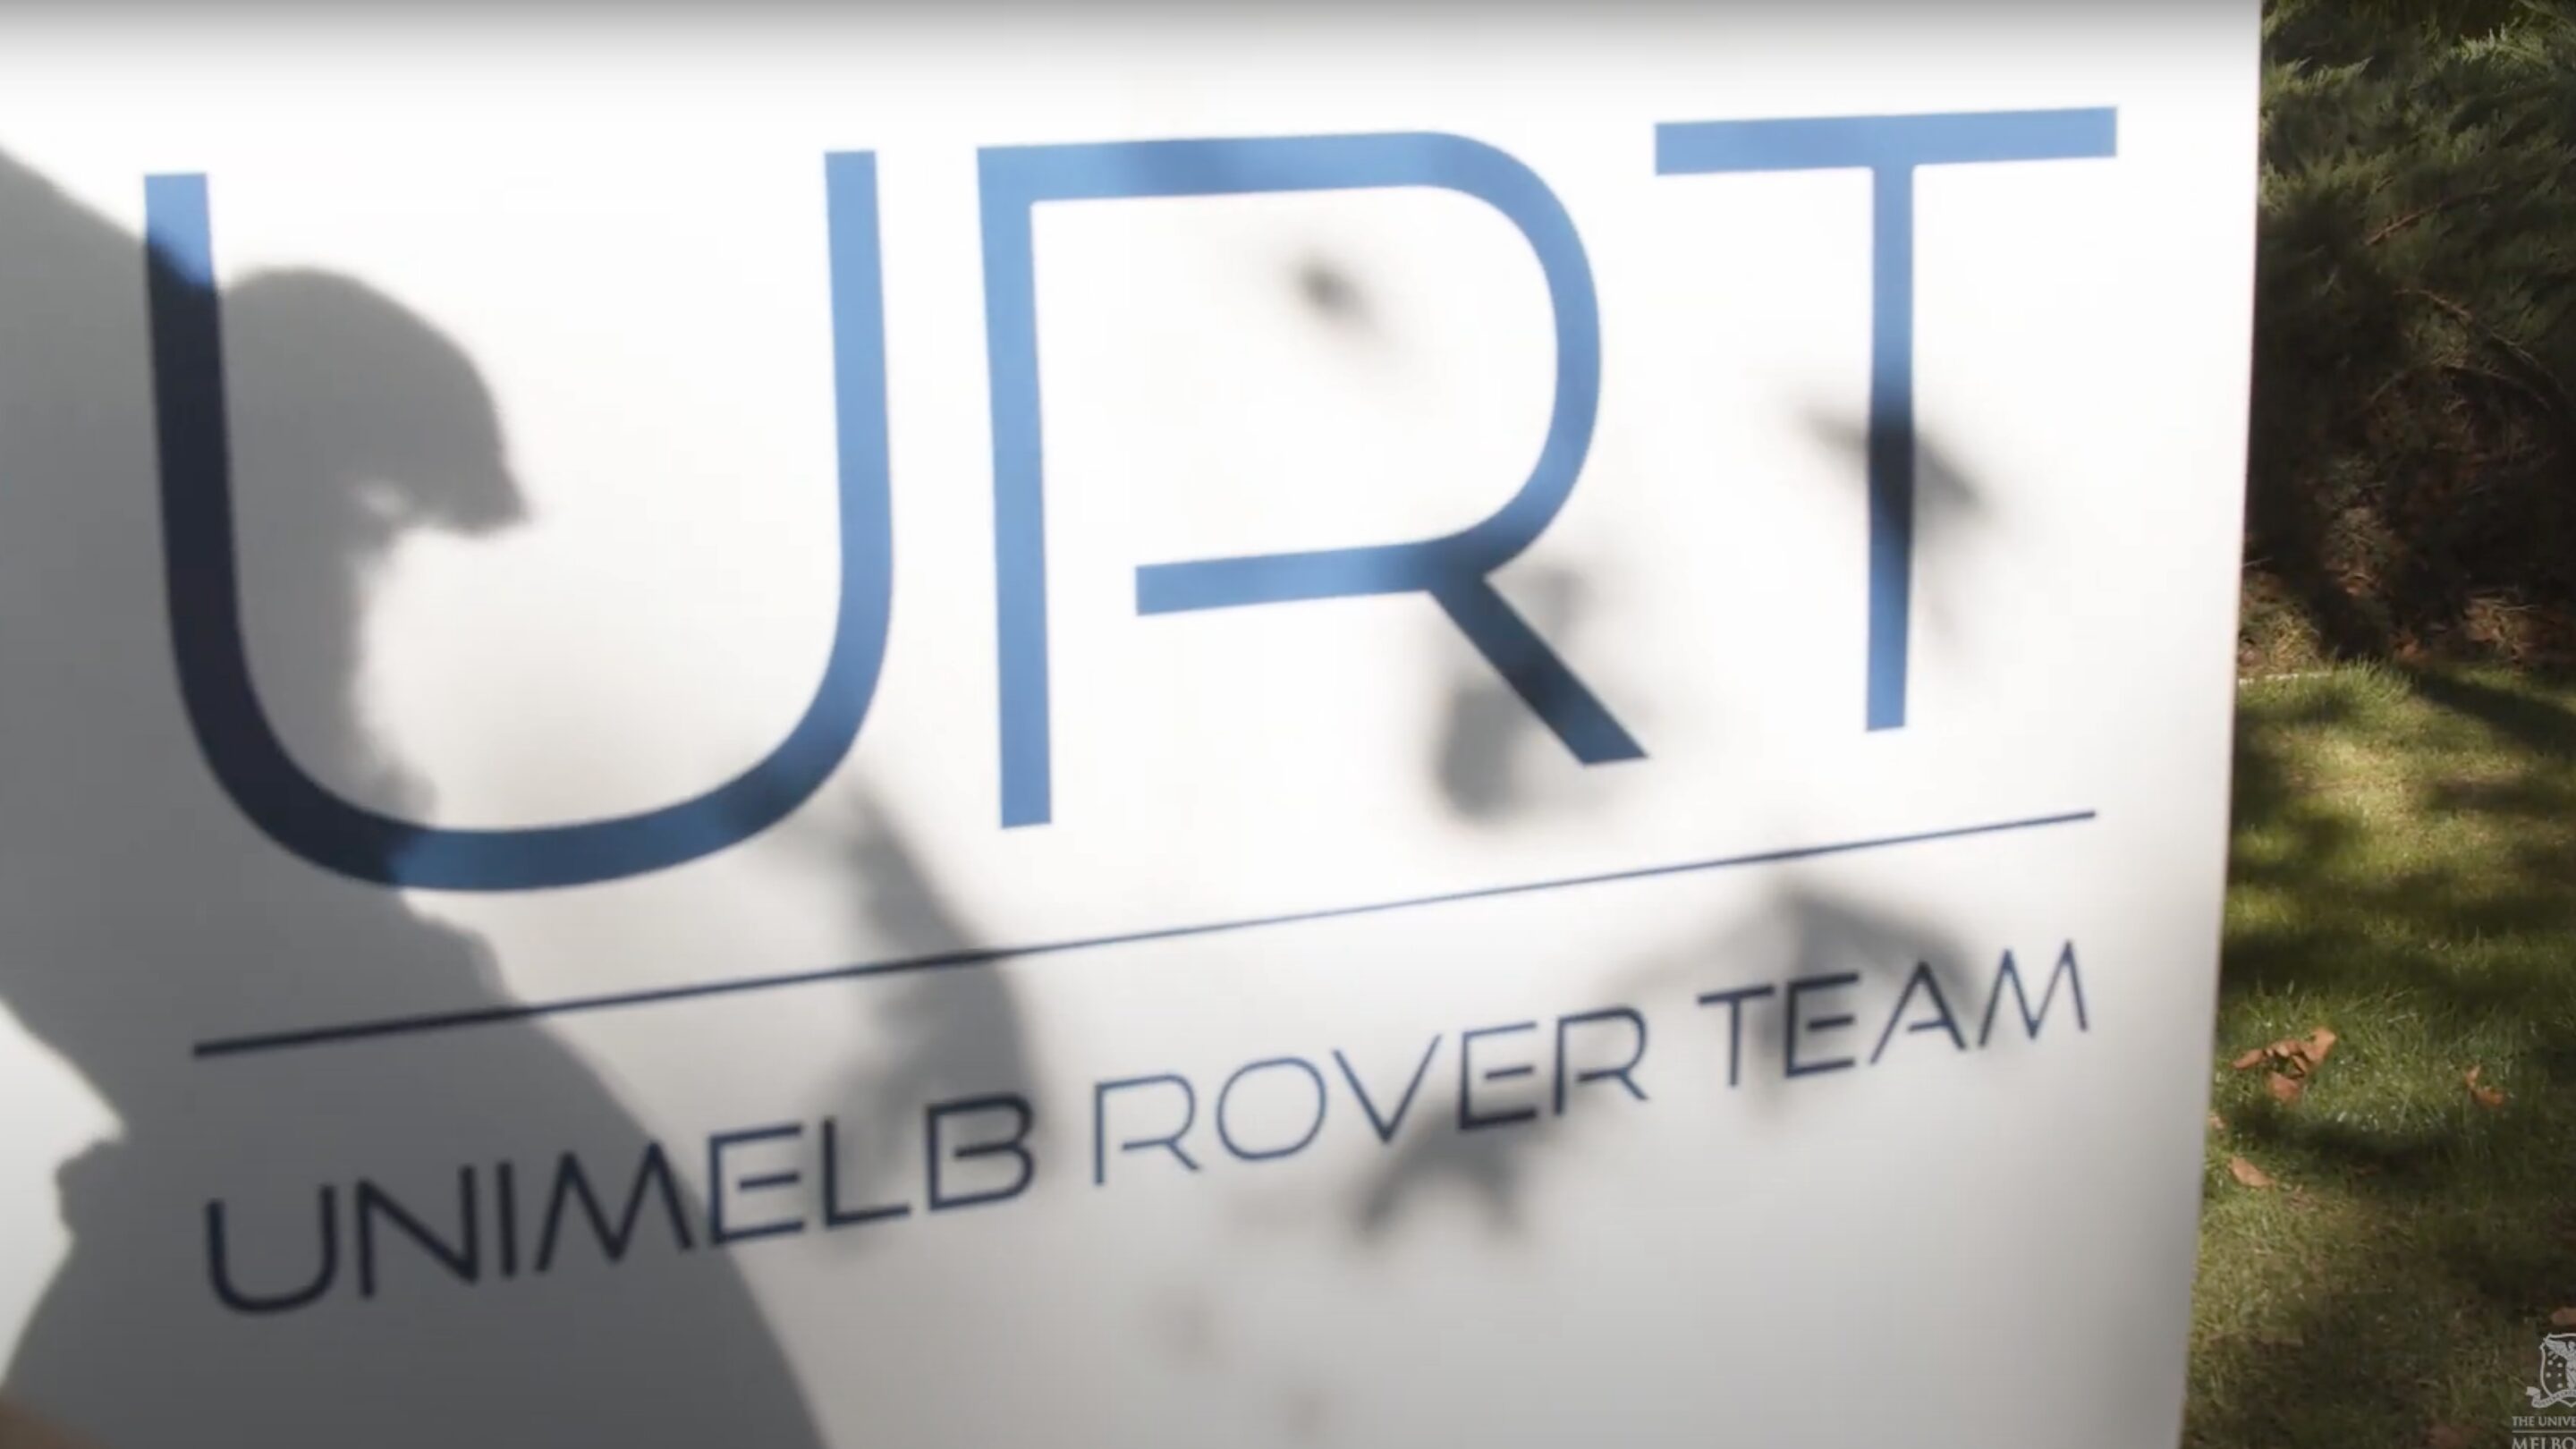 Uni Melb Rover Team